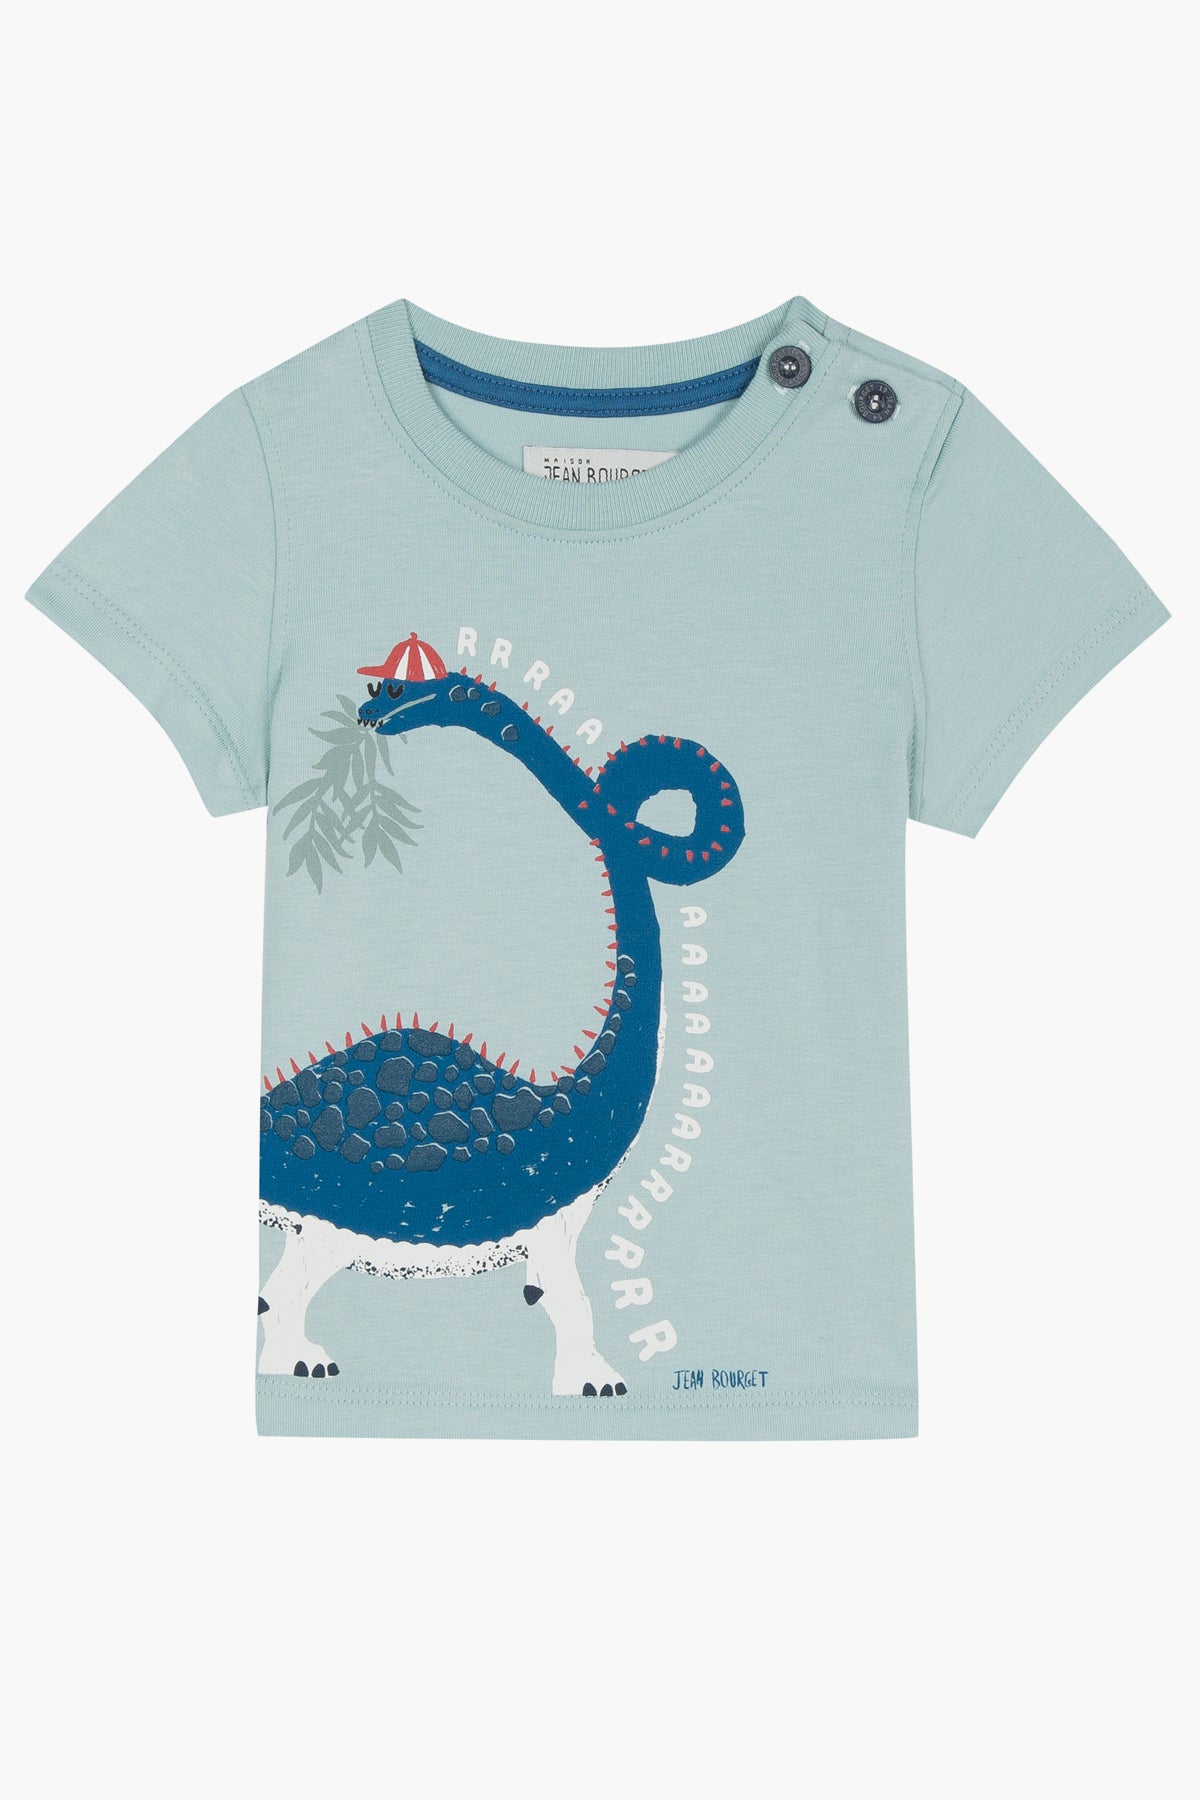 Jean Bourget Apatosaurus Boys Shirt (Size 6M left) – Mini Ruby